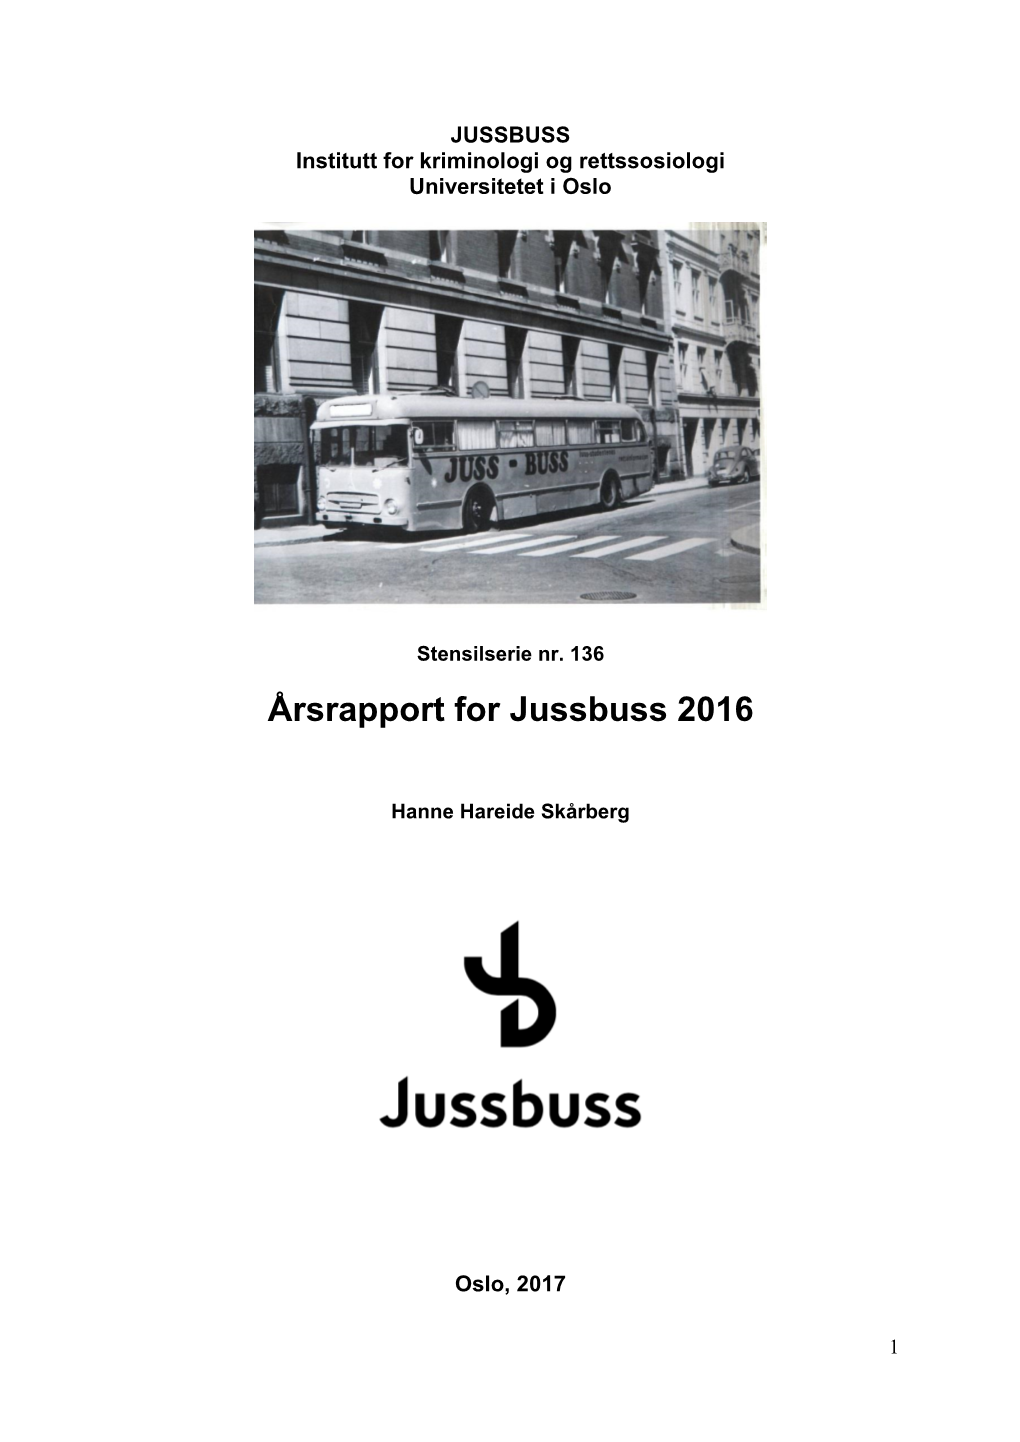 Årsrapport for Jussbuss 2016